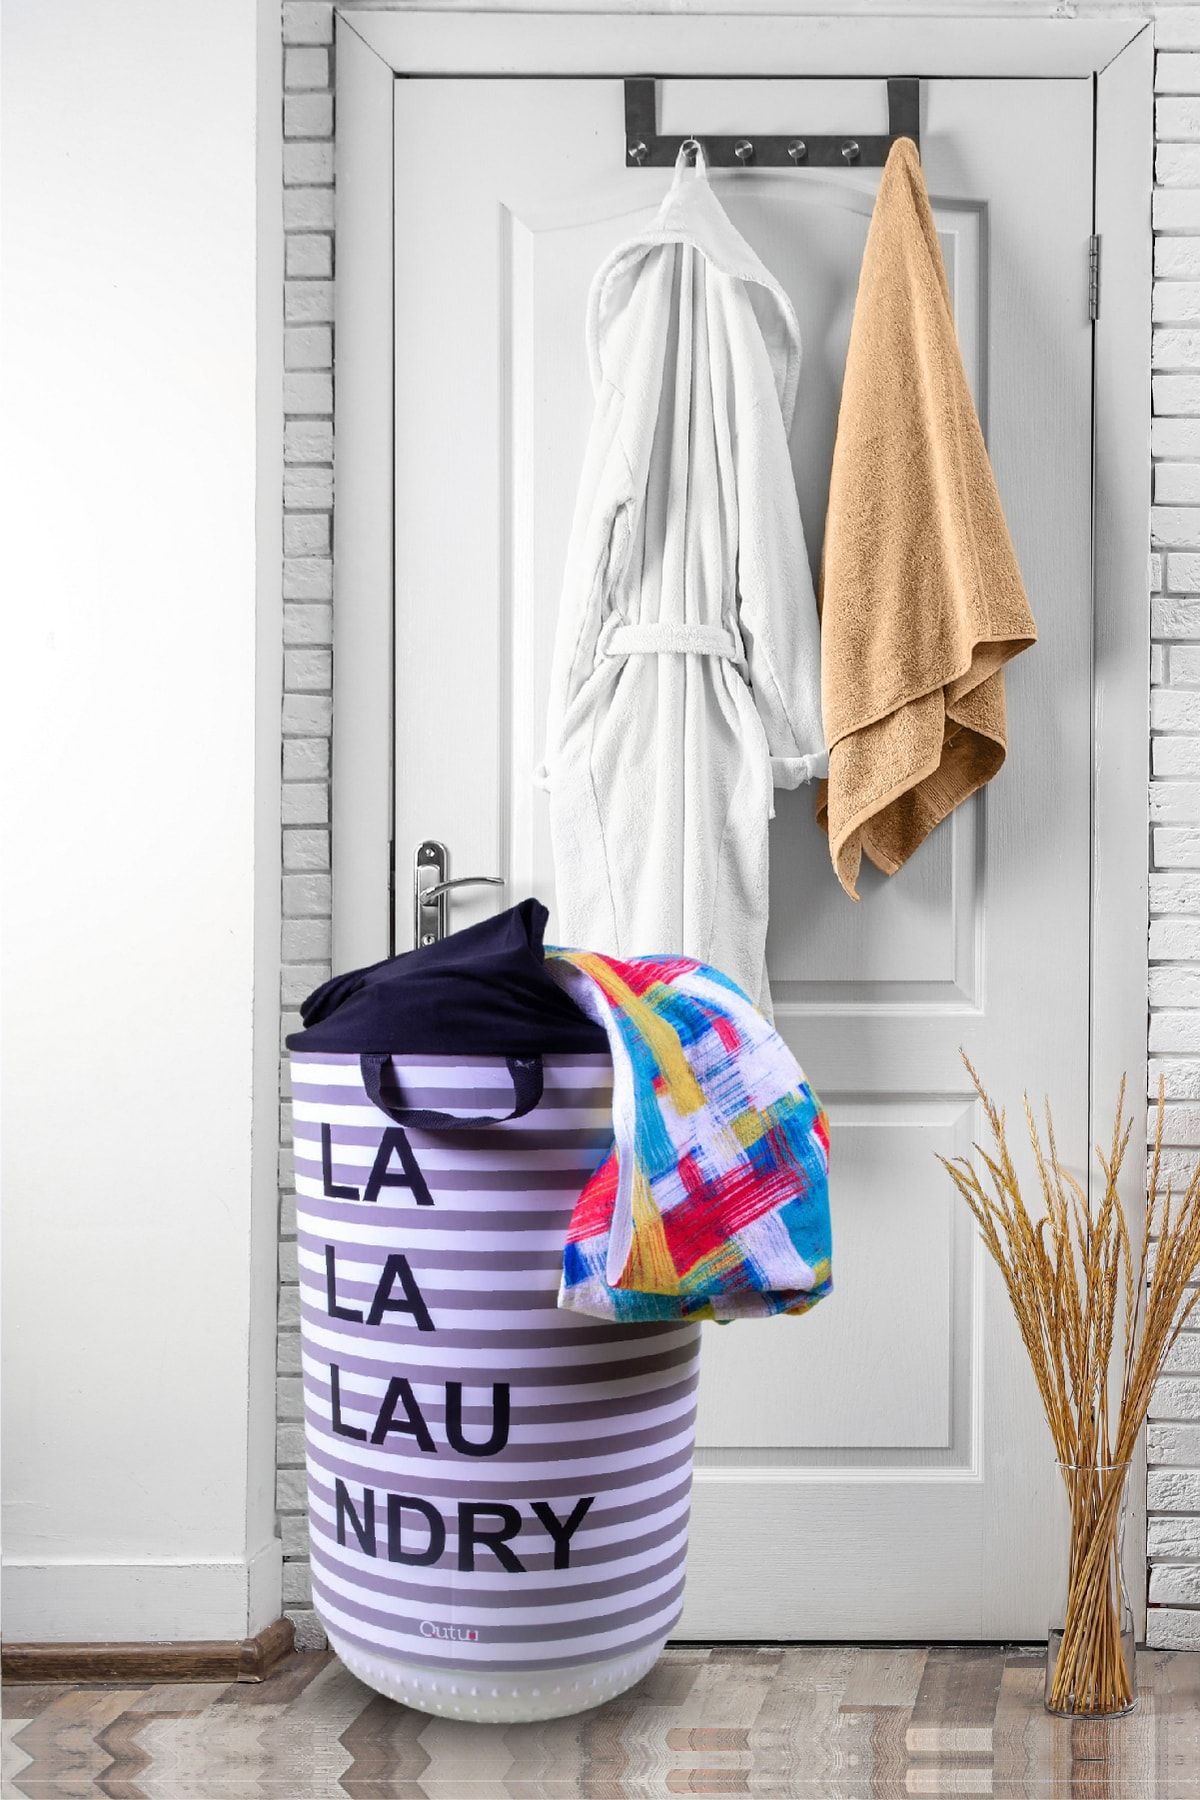 QUTU Qoja Kese 40 L La La La Laundry Desenli Çok Amaçlı Çamaşır Ve Oyuncak Sepeti